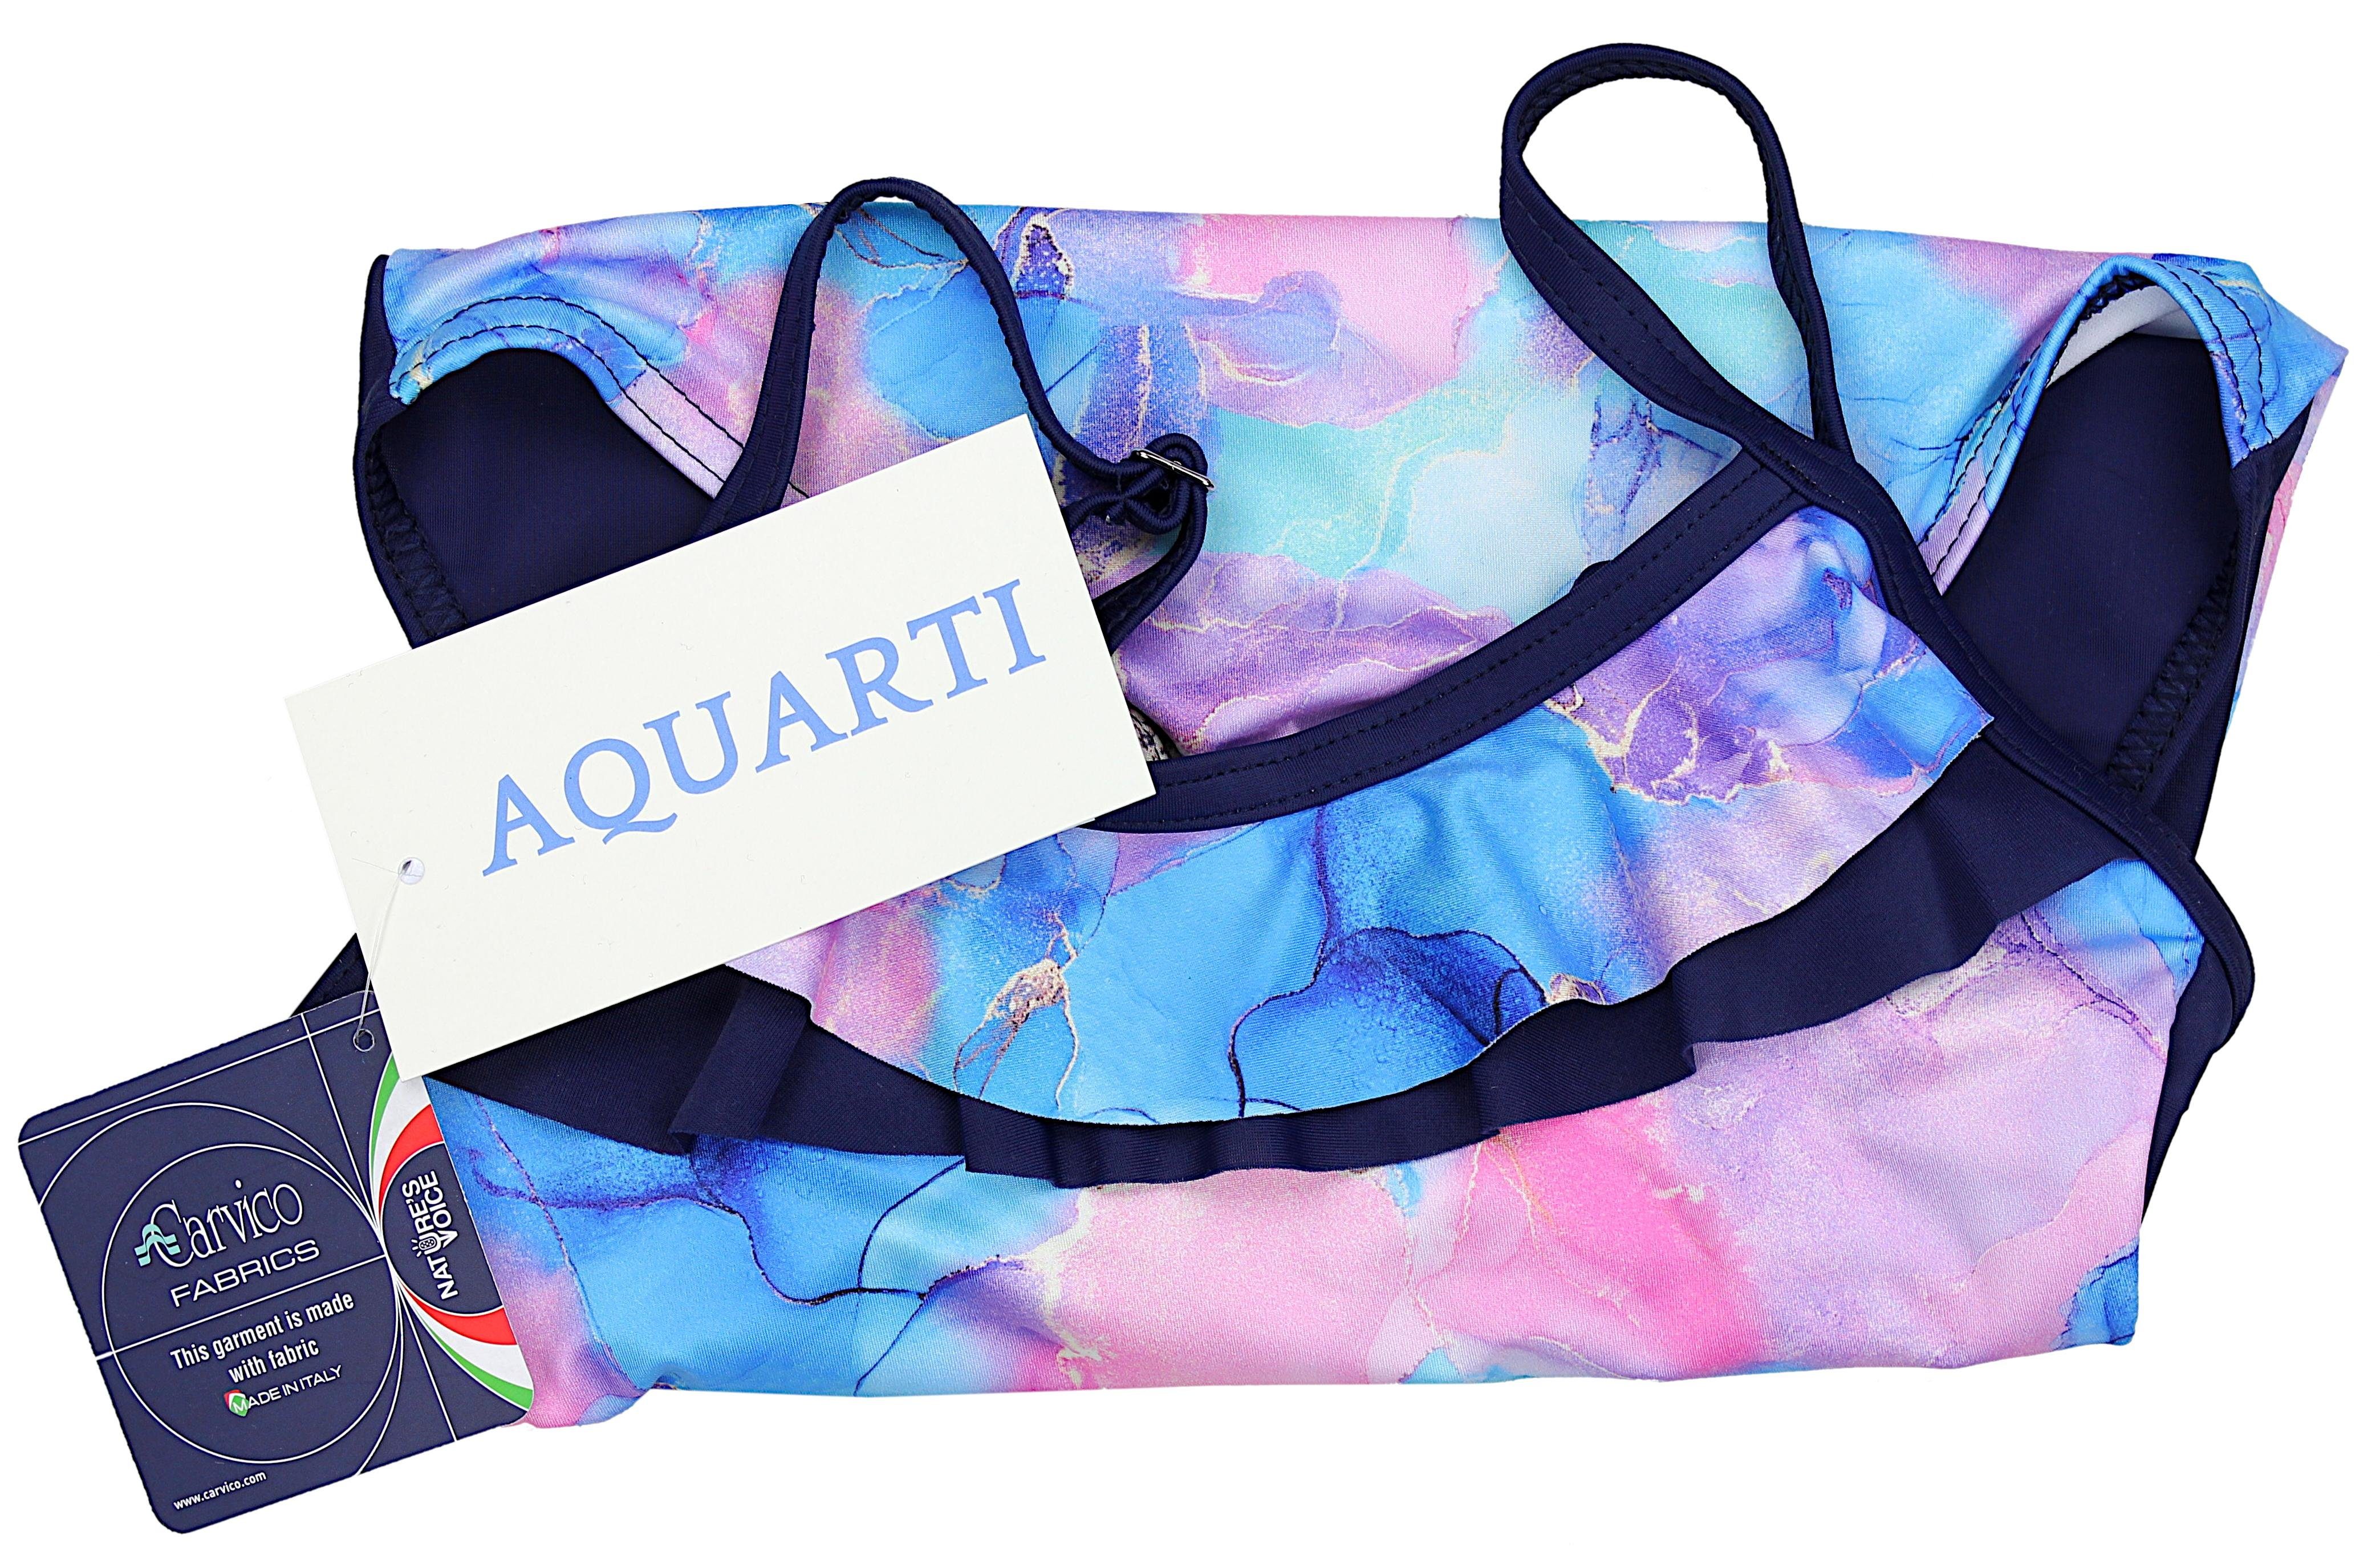 / 027A Blau Dye Aquarti Badeanzug mit / Tie Dunkelblau Rüschen mit Streifen Aquarti / / Spaghettiträgern Rosa / Badeanzug Lila Mädchen